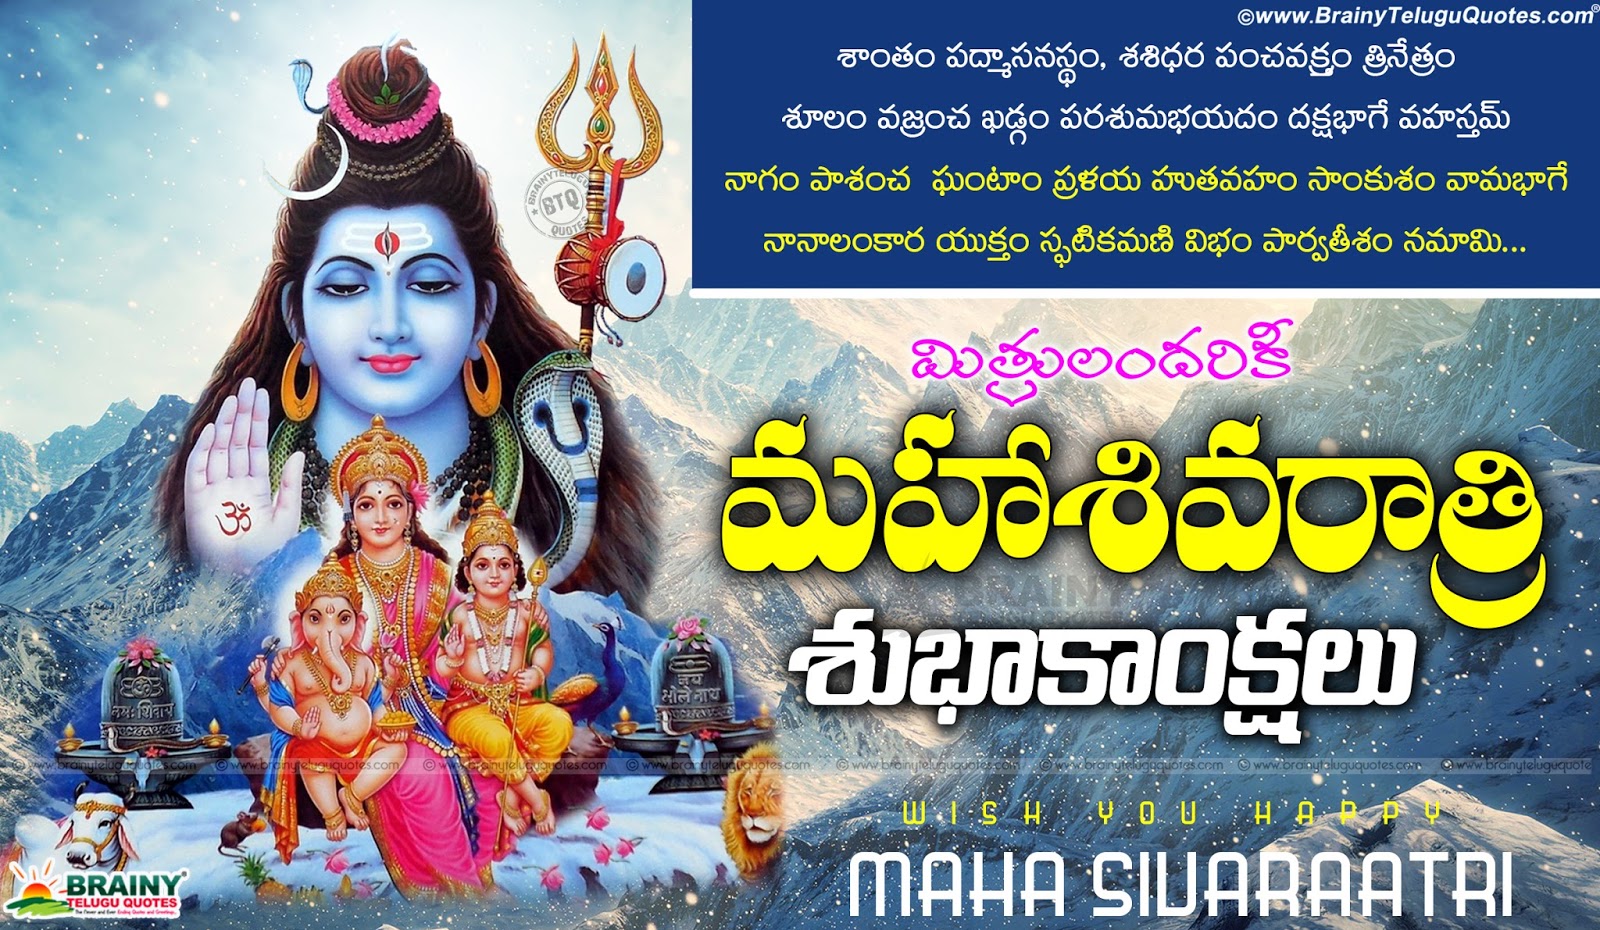 Trending Maha Sivaraatri Wishes in Telugu Lord Shiva Hd wallpapers with Sivaraatri Greetings in Telugu